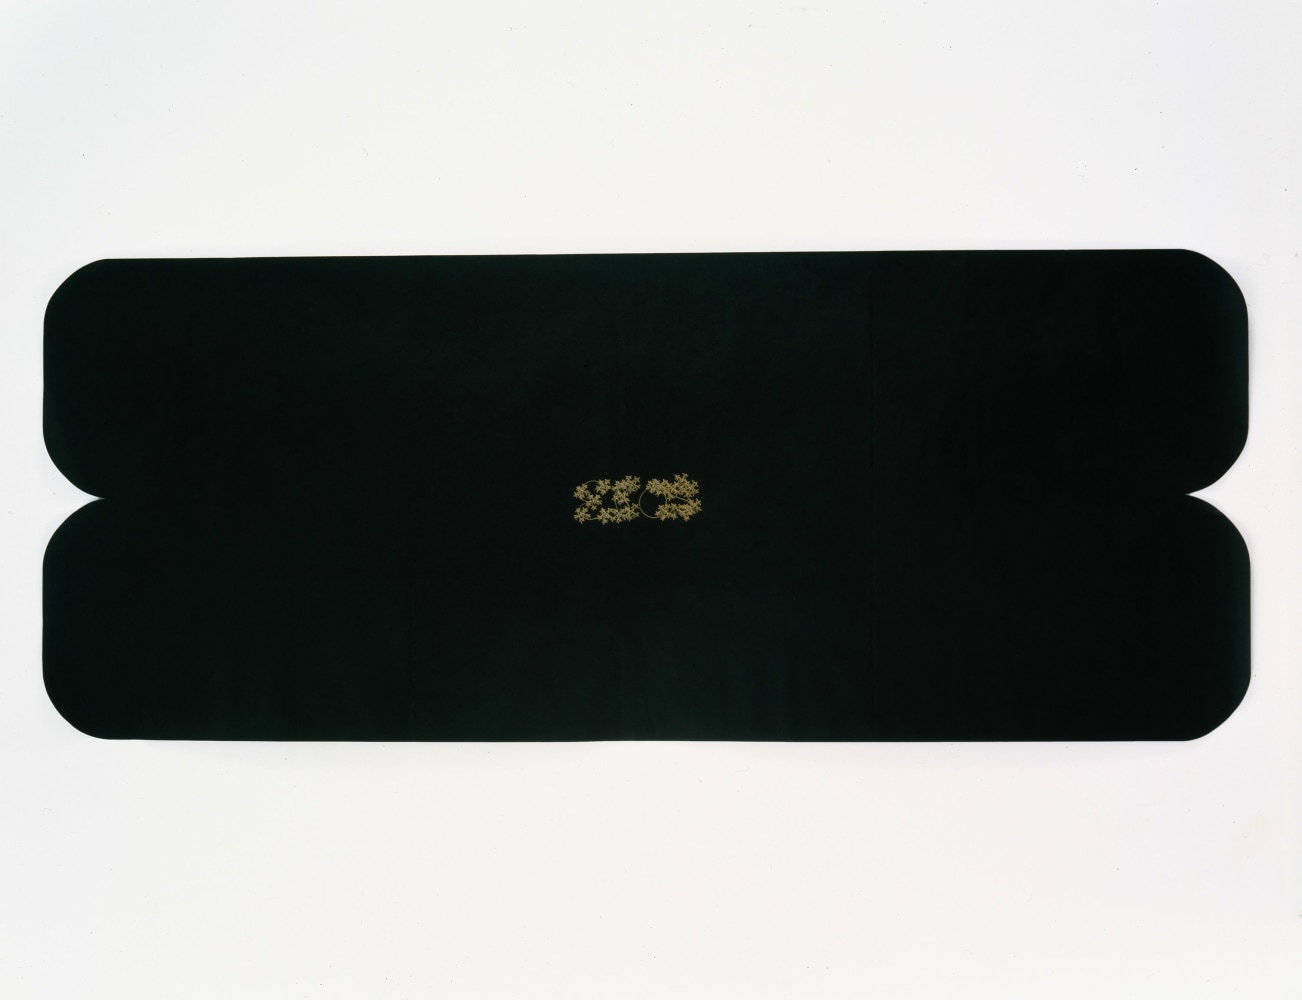 James Lee Byars

&amp;ldquo;Eros&amp;rdquo;, 1993

Gold pencil on black Japanese paper

26 3/4 x 67 inches

68 x 170 cm

JBZ 190